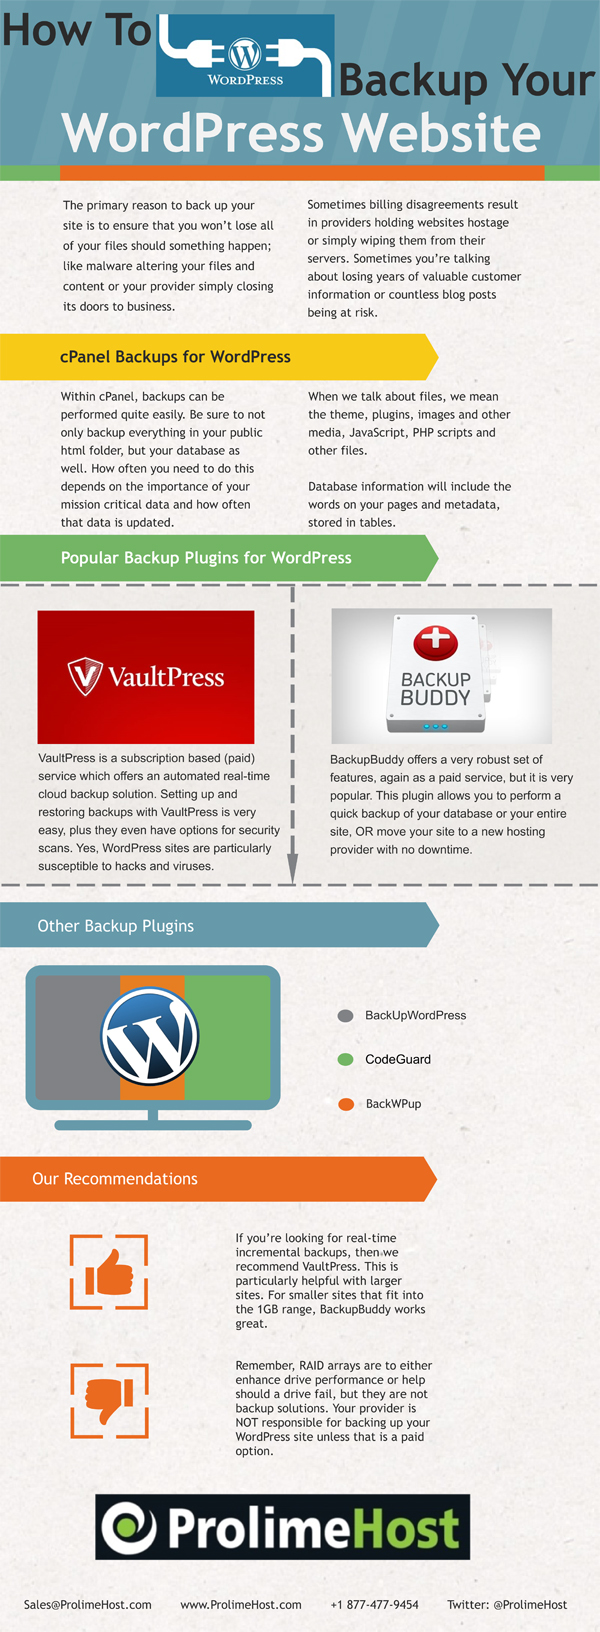 How to backup your WordPress website